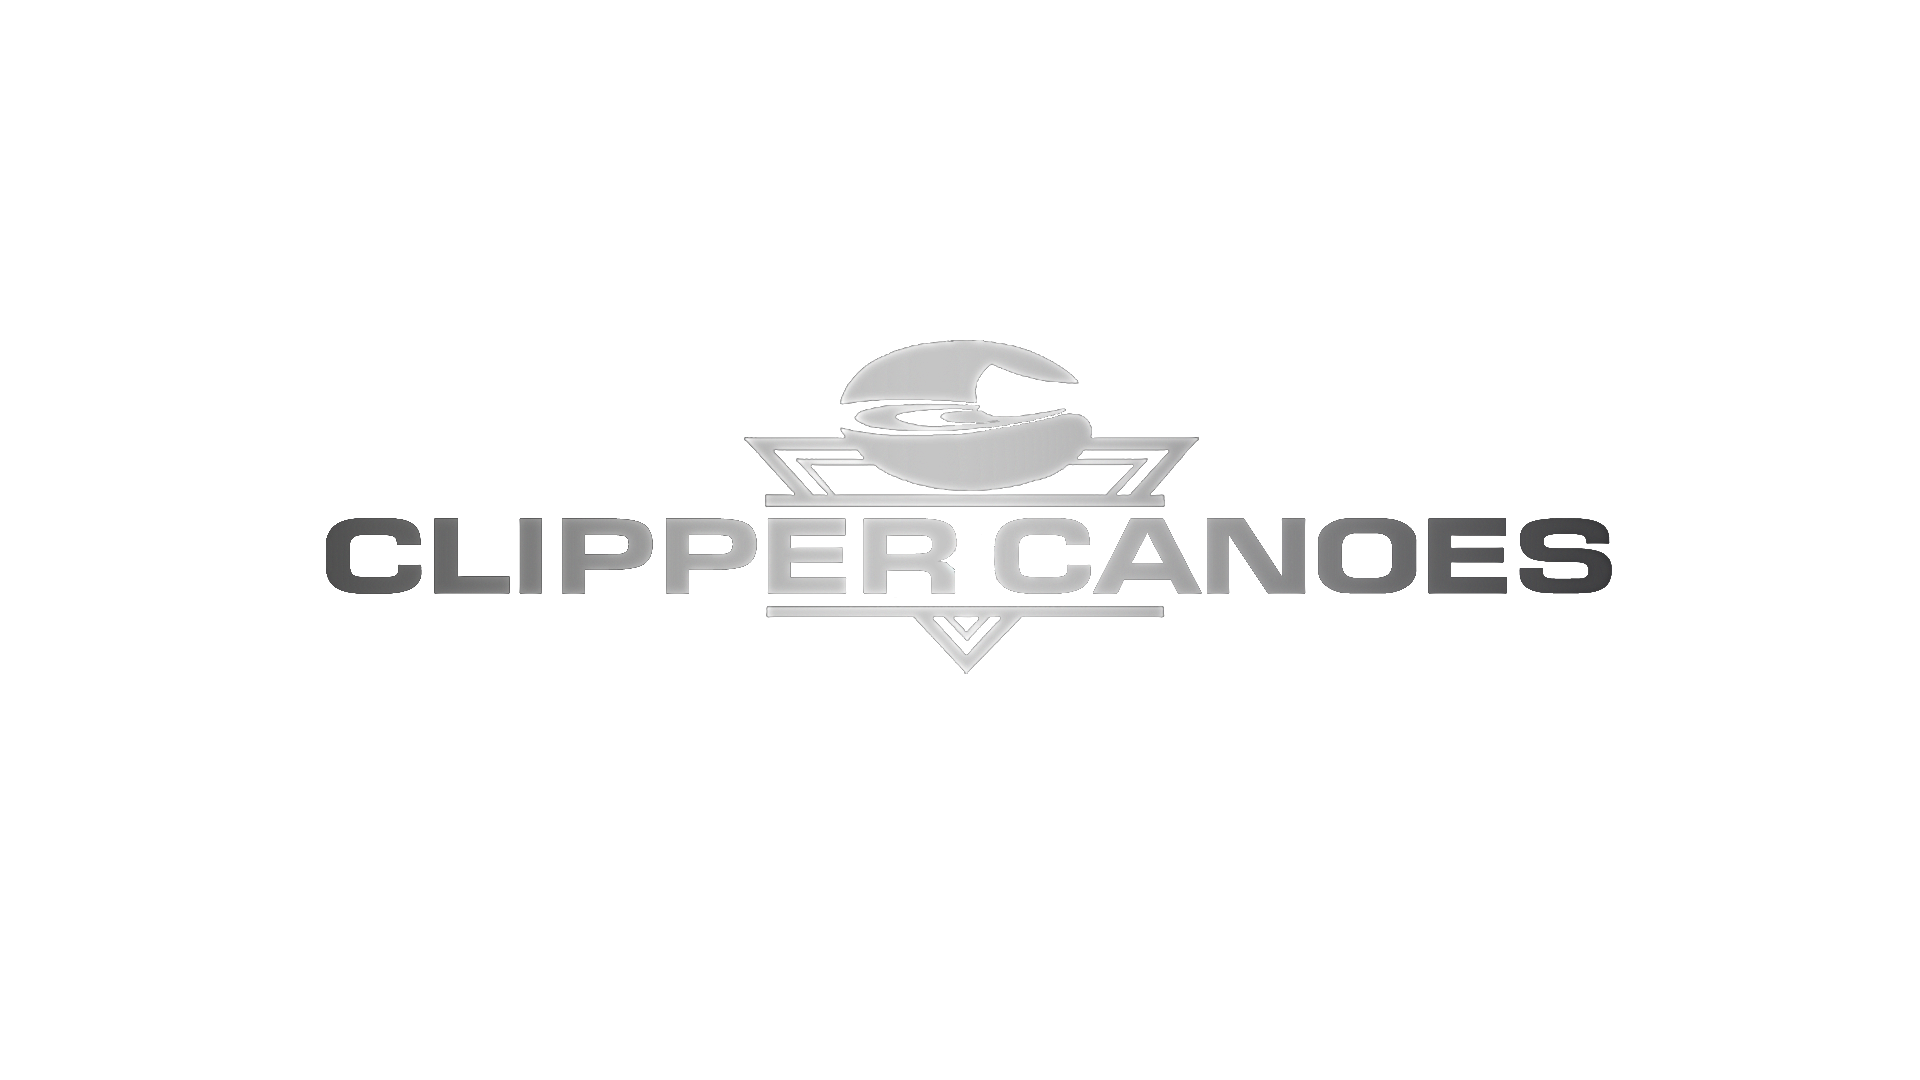 www.clippercanoes.com